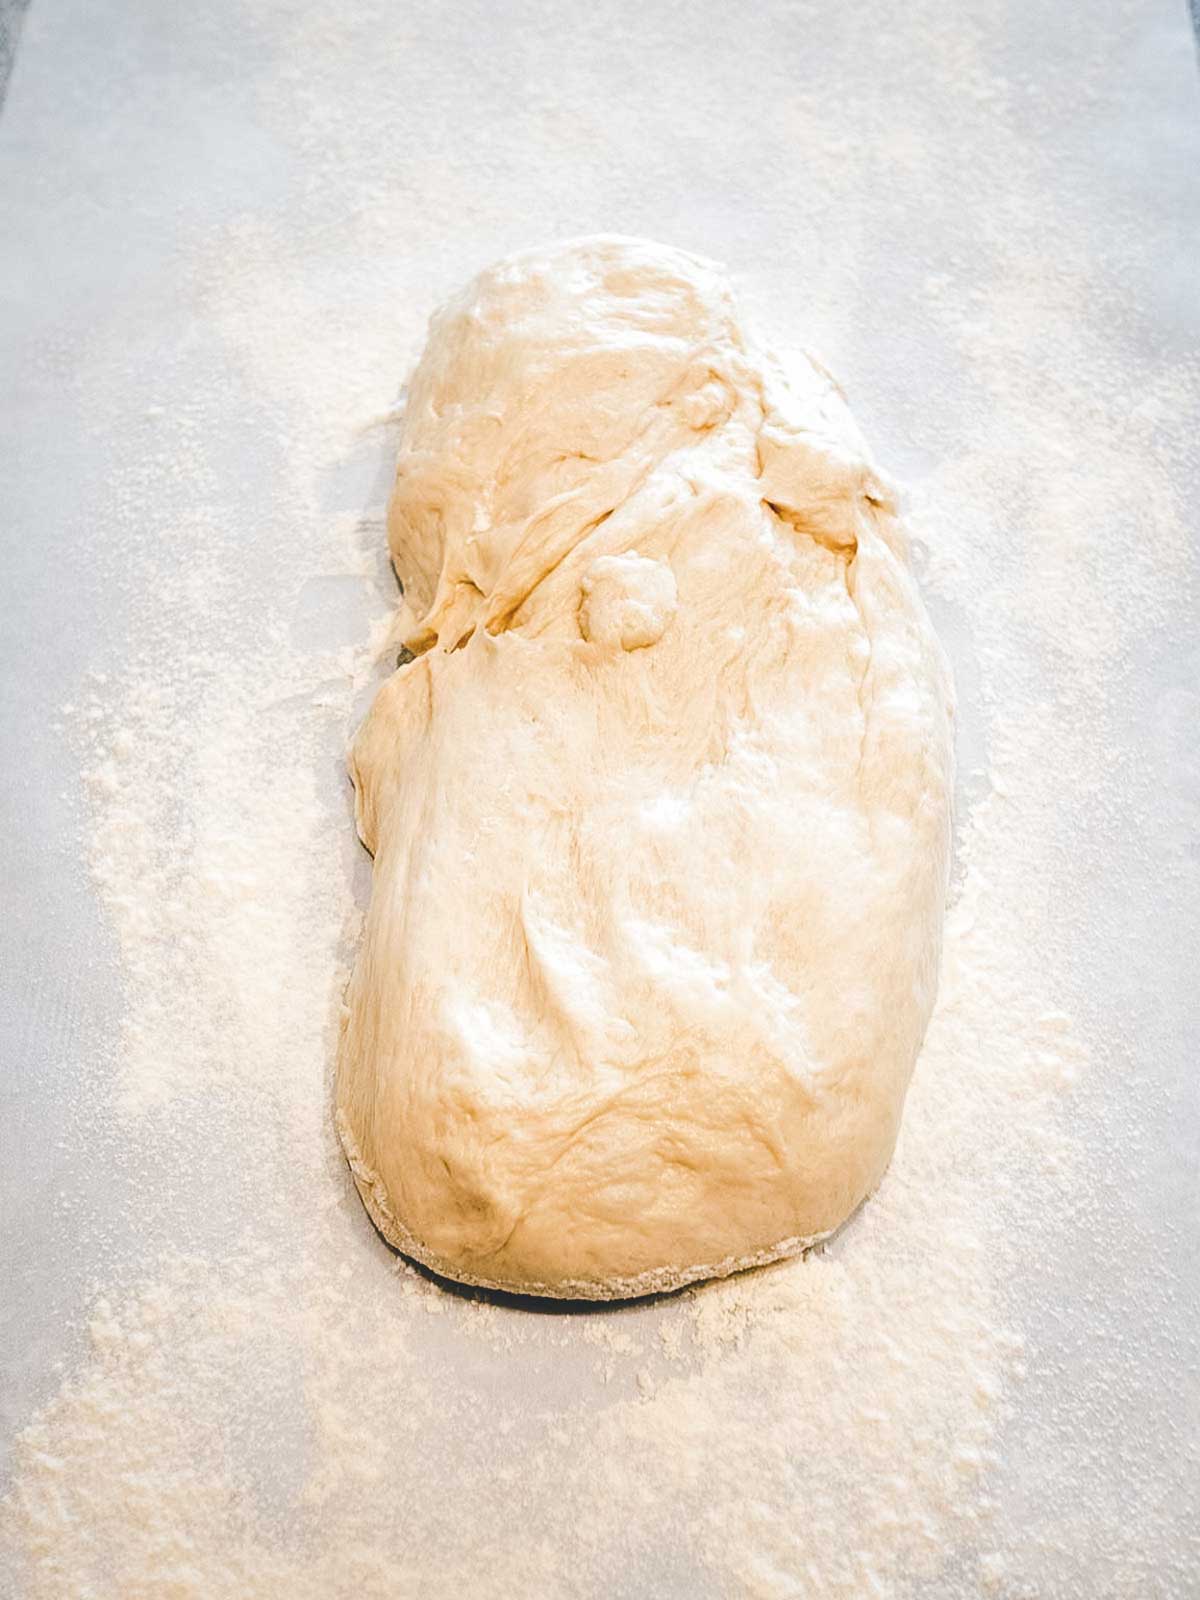 Dough from bread machine.